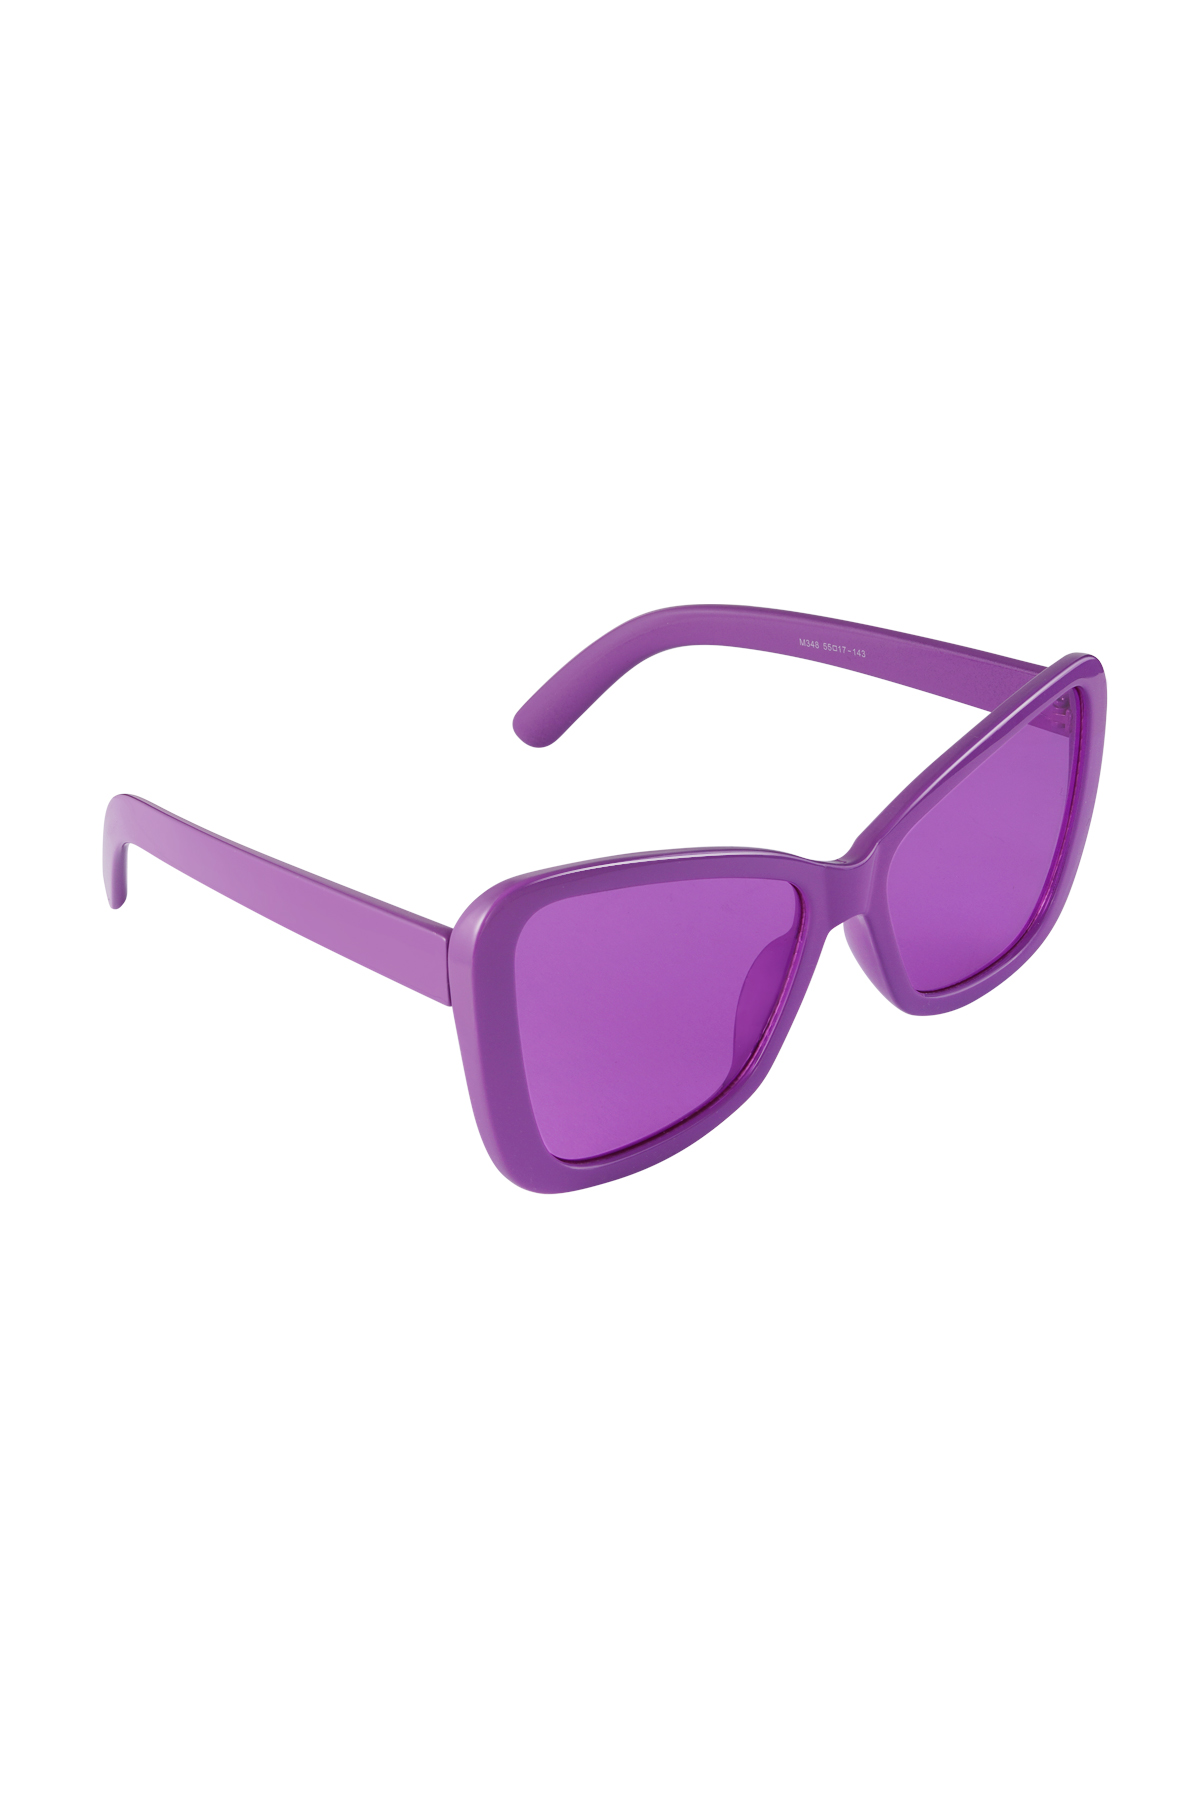 Sunglasses cat eye simple - purple